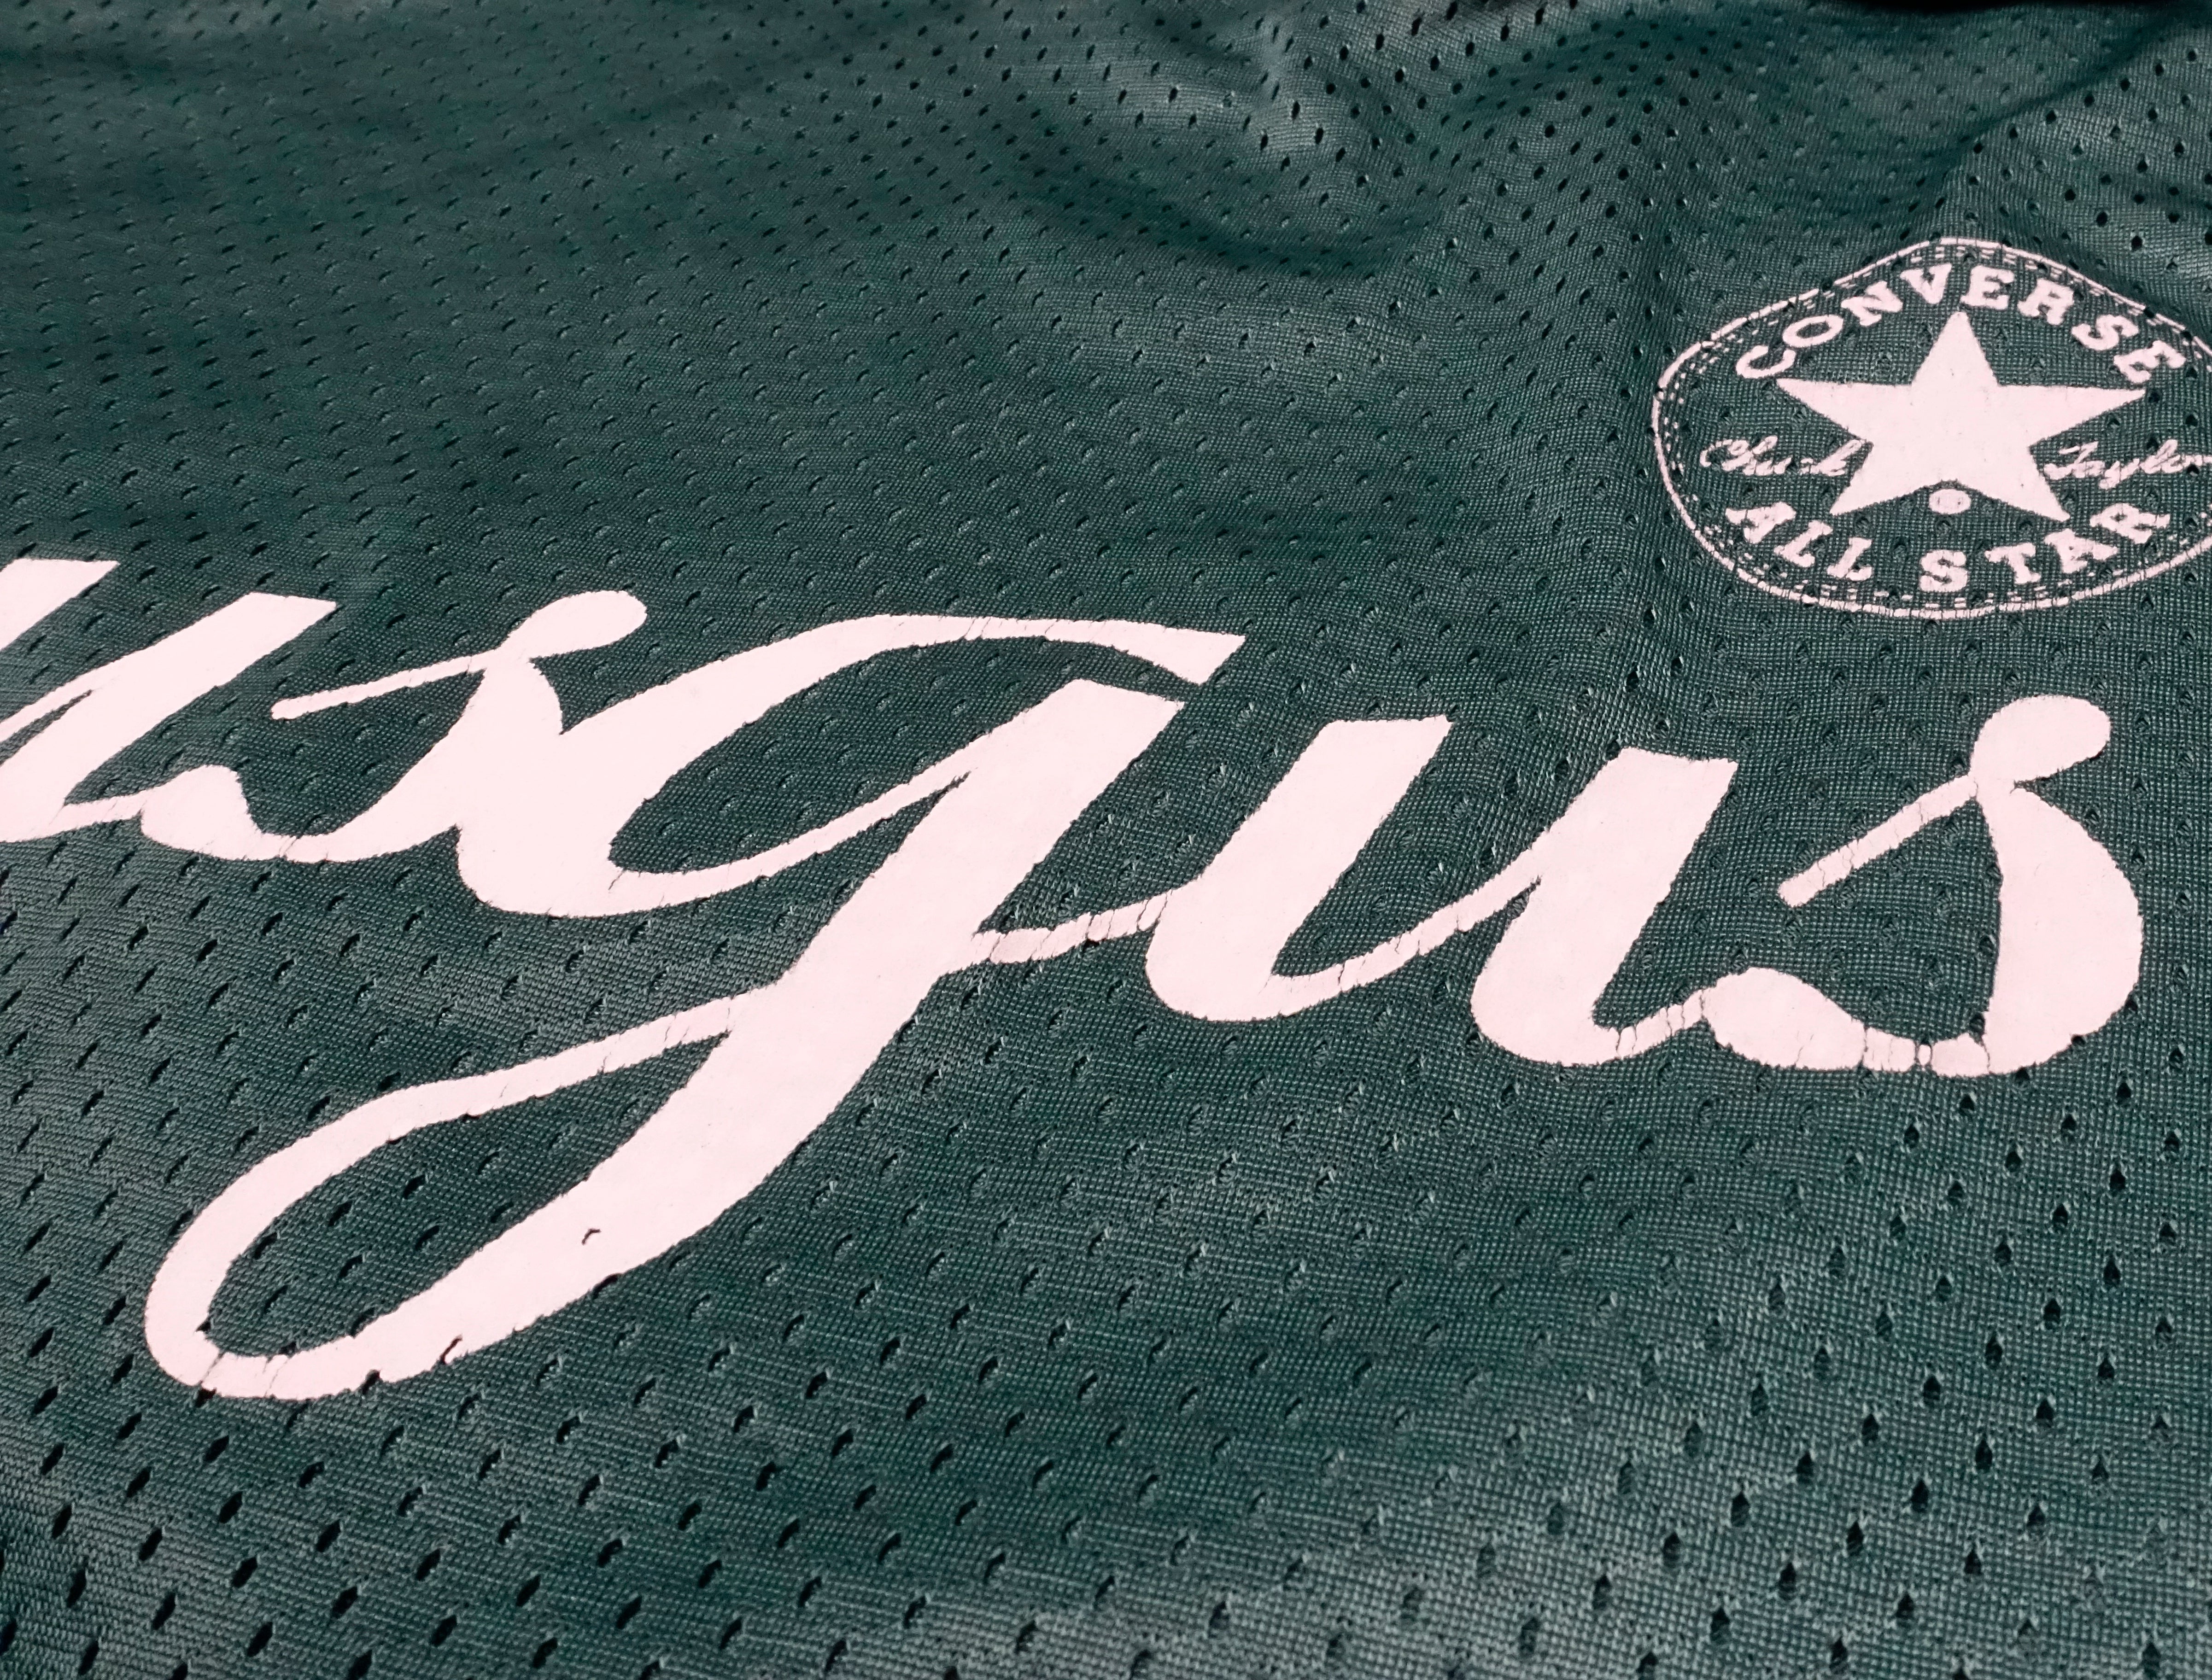 Gus Gus - Polydistortion Promo Converse Soccer Jersey Tour Shirt Size XL